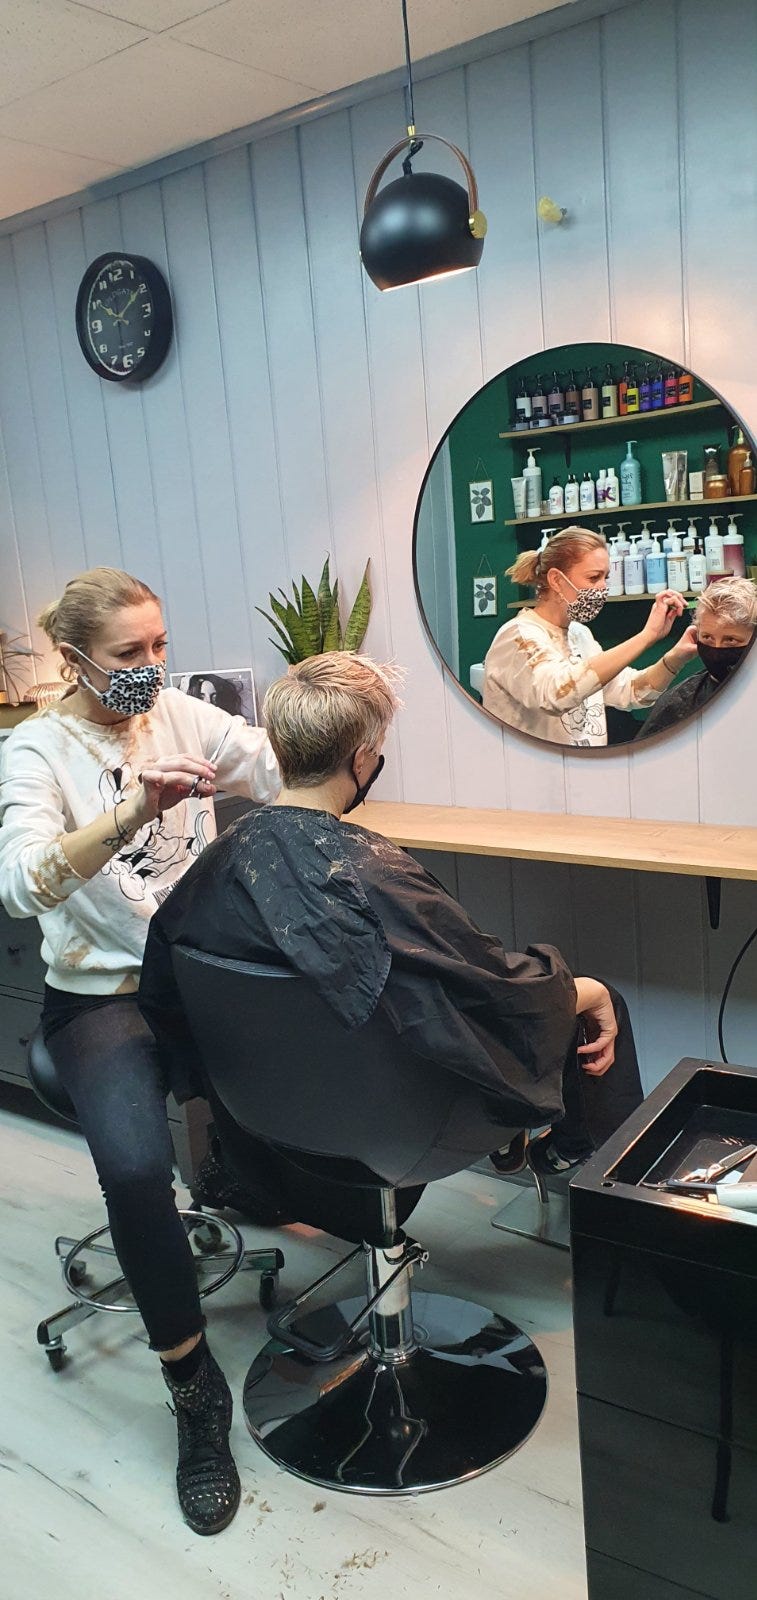 SIlvija Belas in her salon putting dying her client’s hair in Zagreb in November 2020. Photograph by Katja Belas.